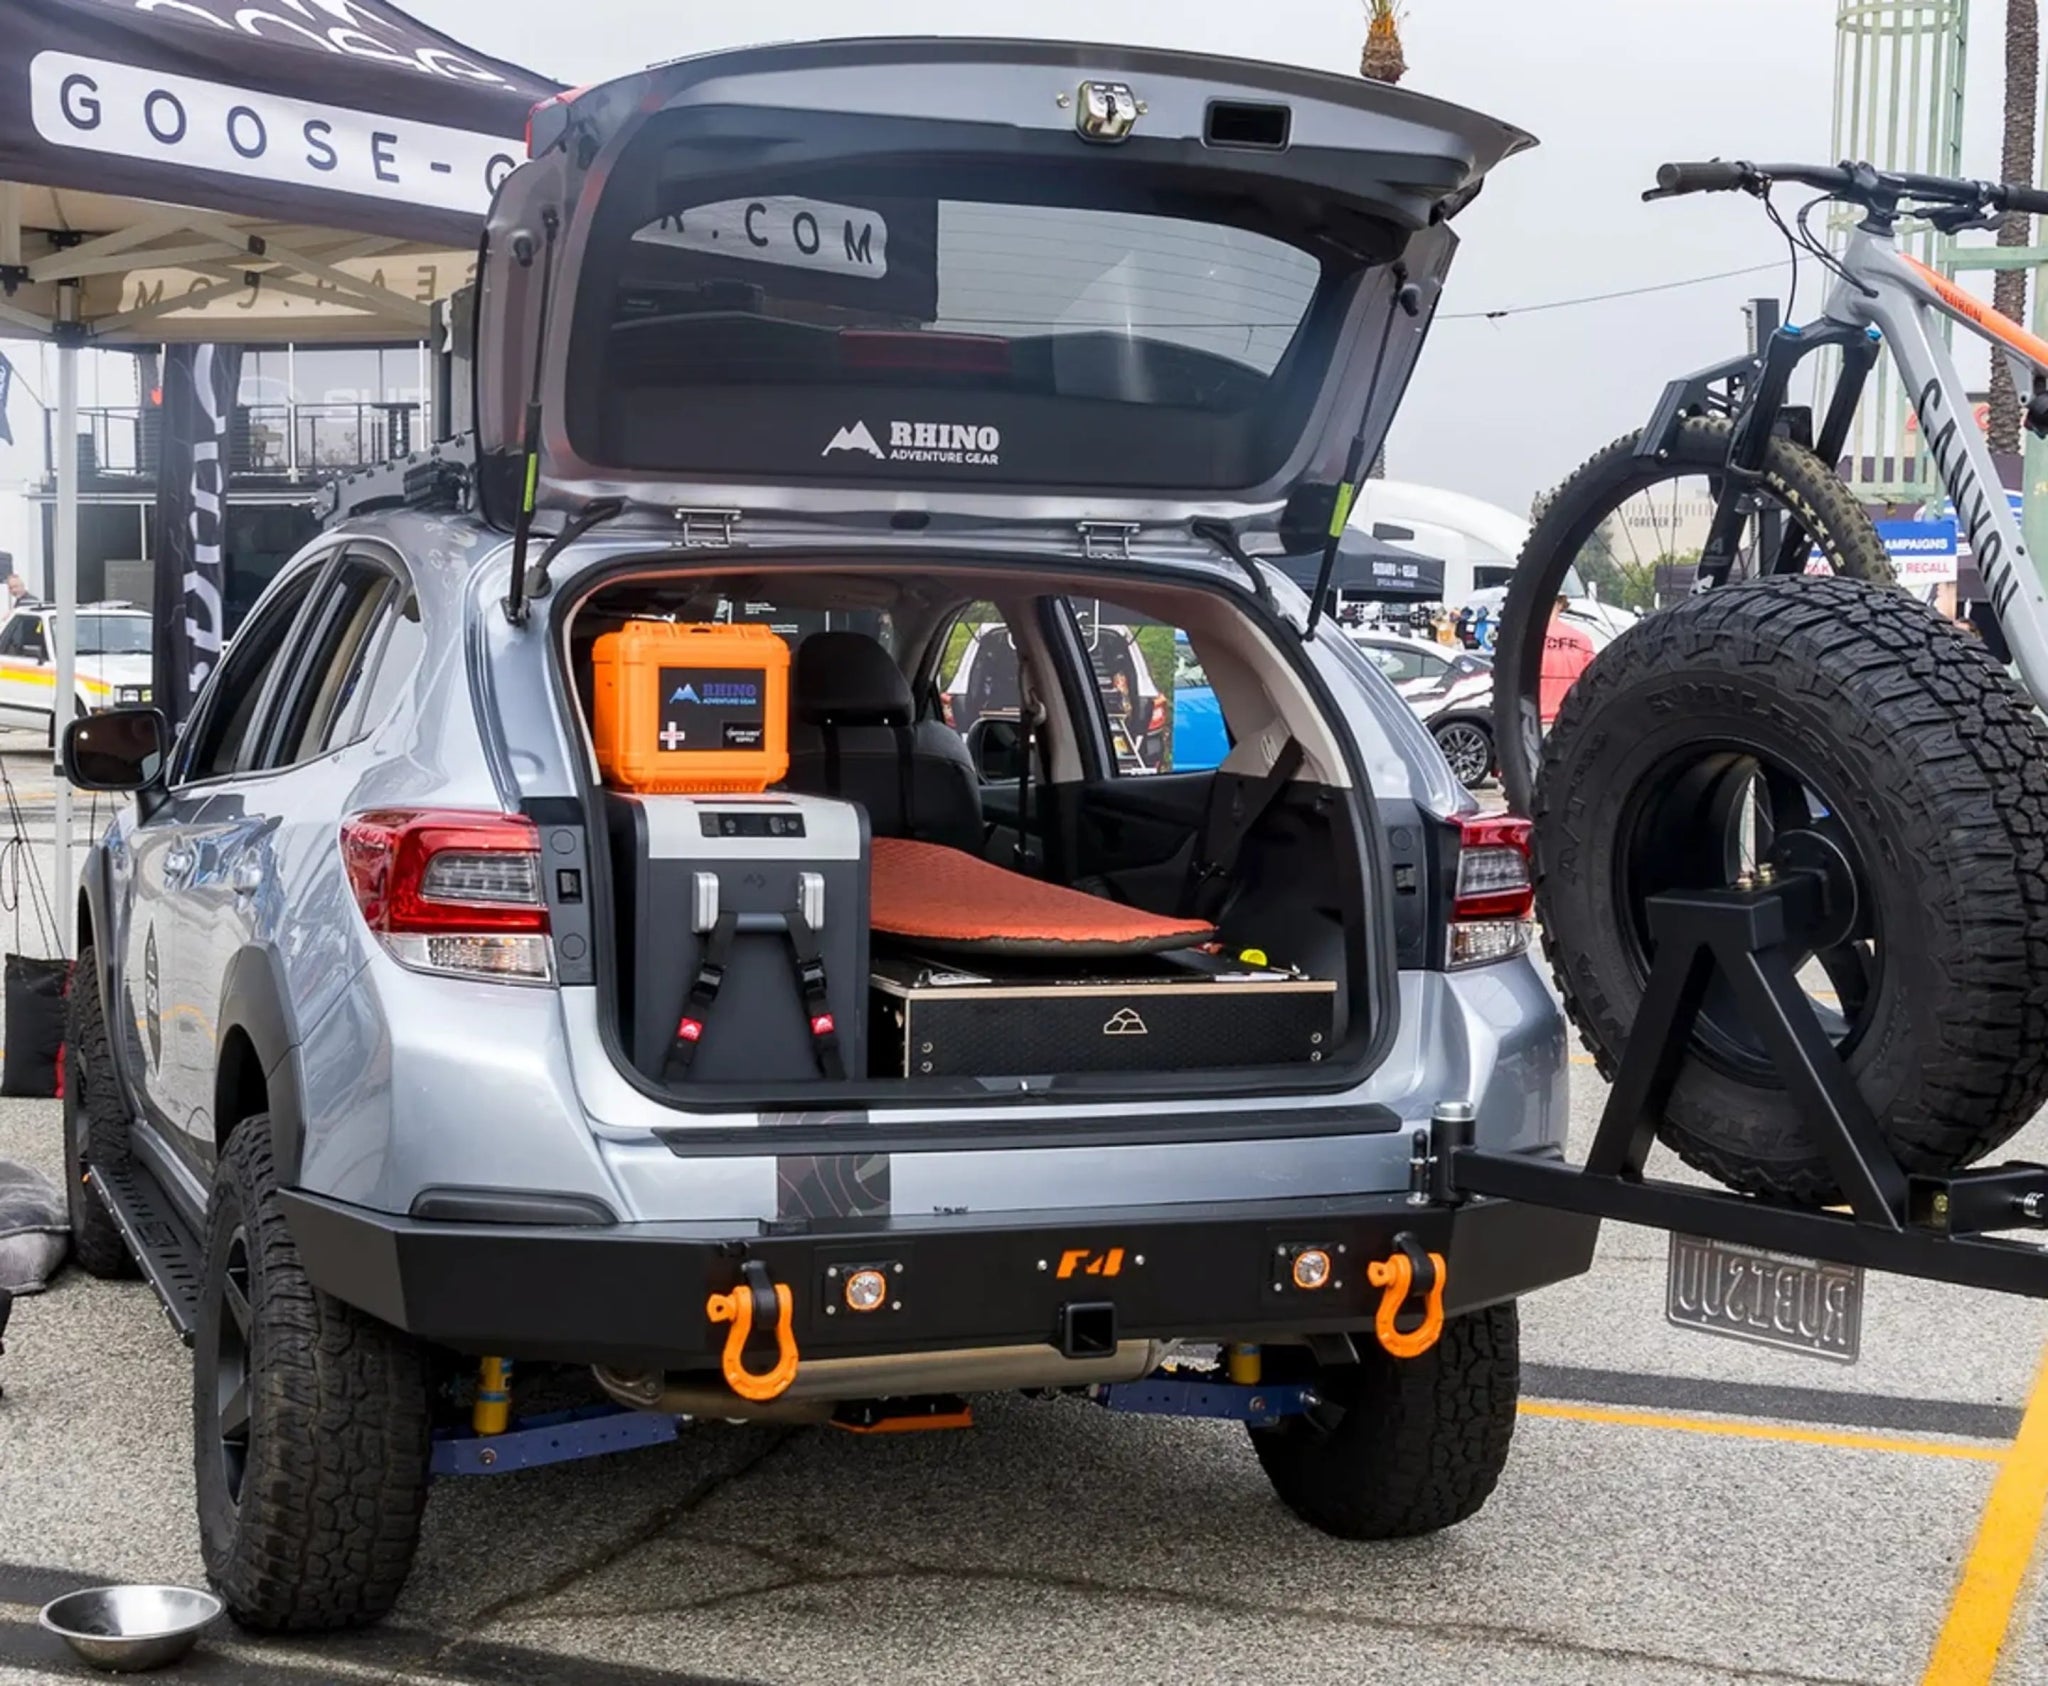 Goose Gear's DIY RV kit turns Subaru or RAV4 into slick camper wagon. - Goose Gear